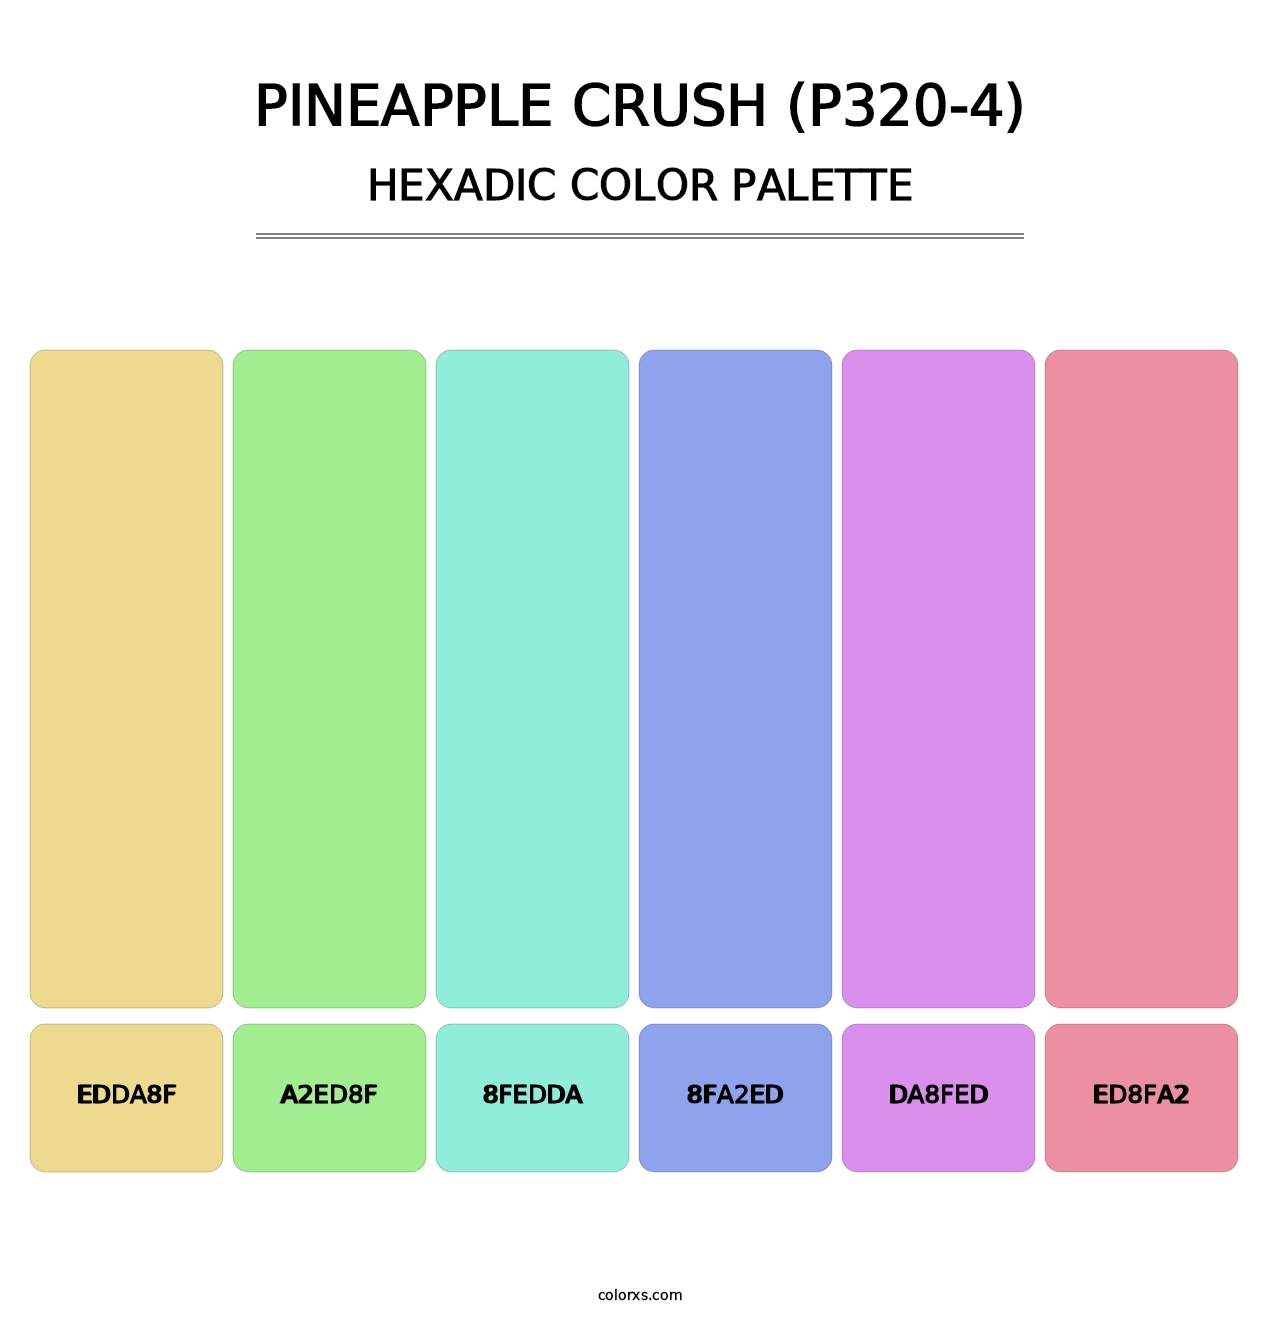 Pineapple Crush (P320-4) - Hexadic Color Palette